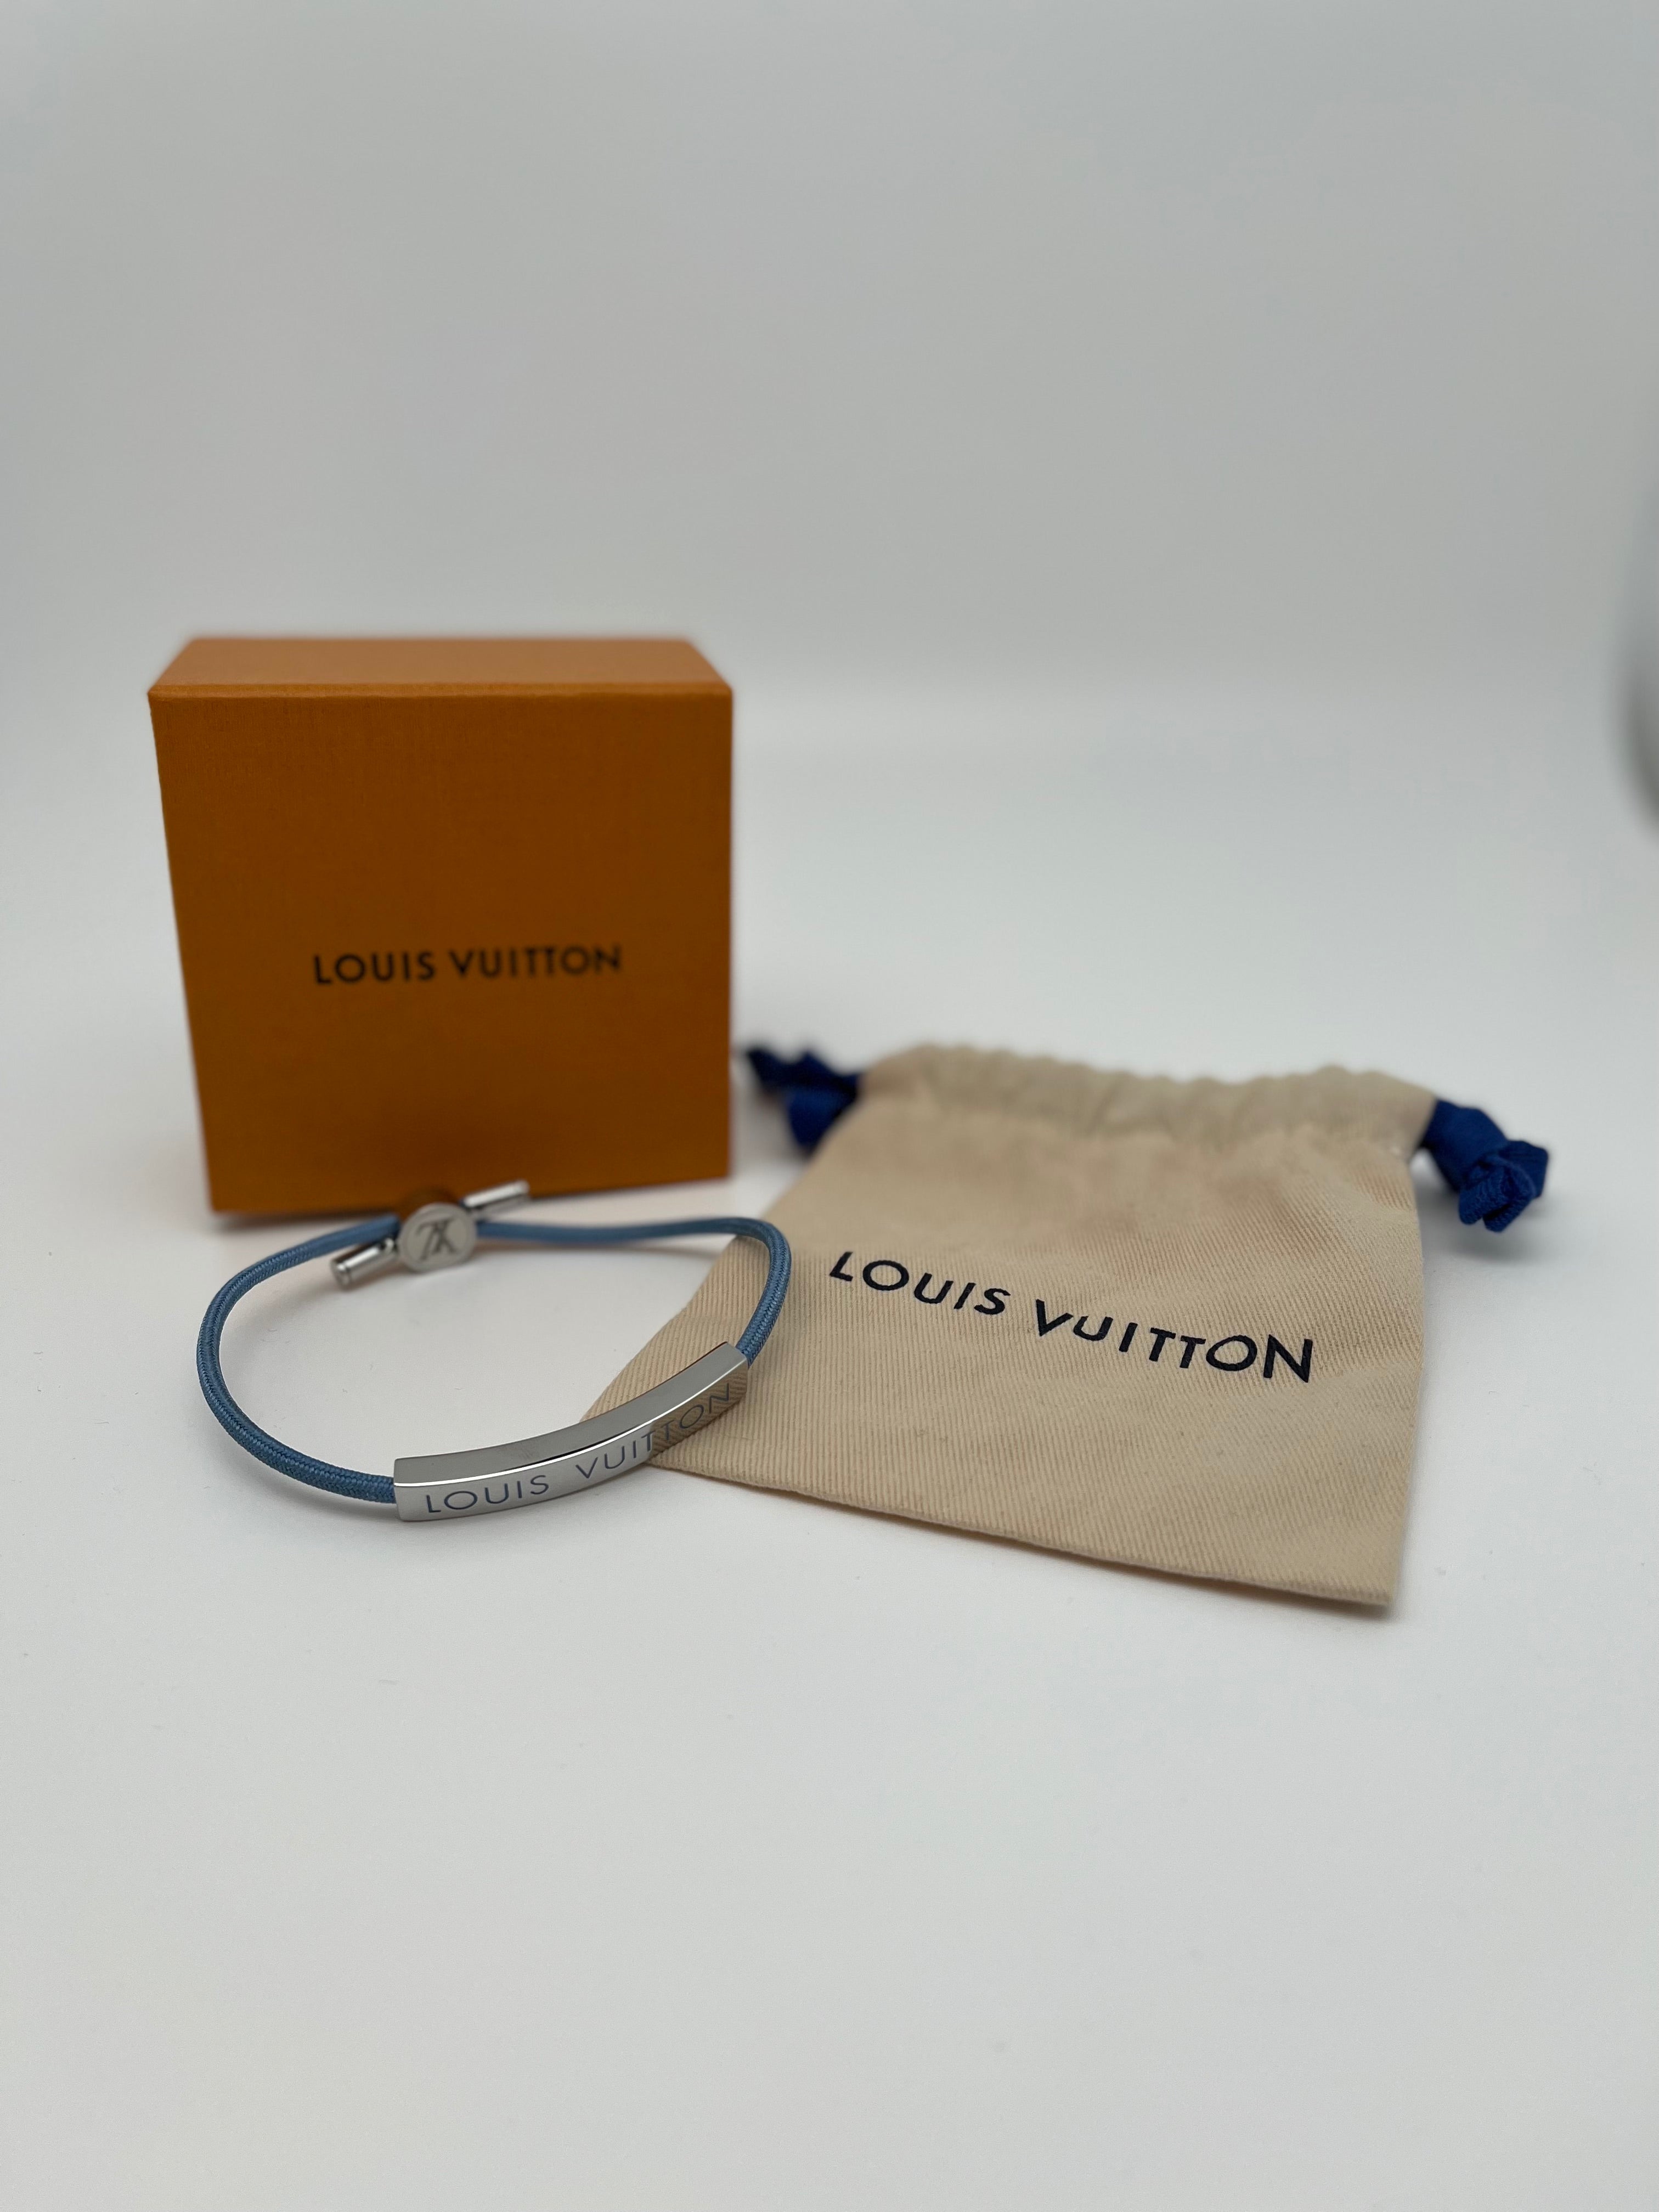 Louis Vuitton LV Iconic Earrings Palladium Brass